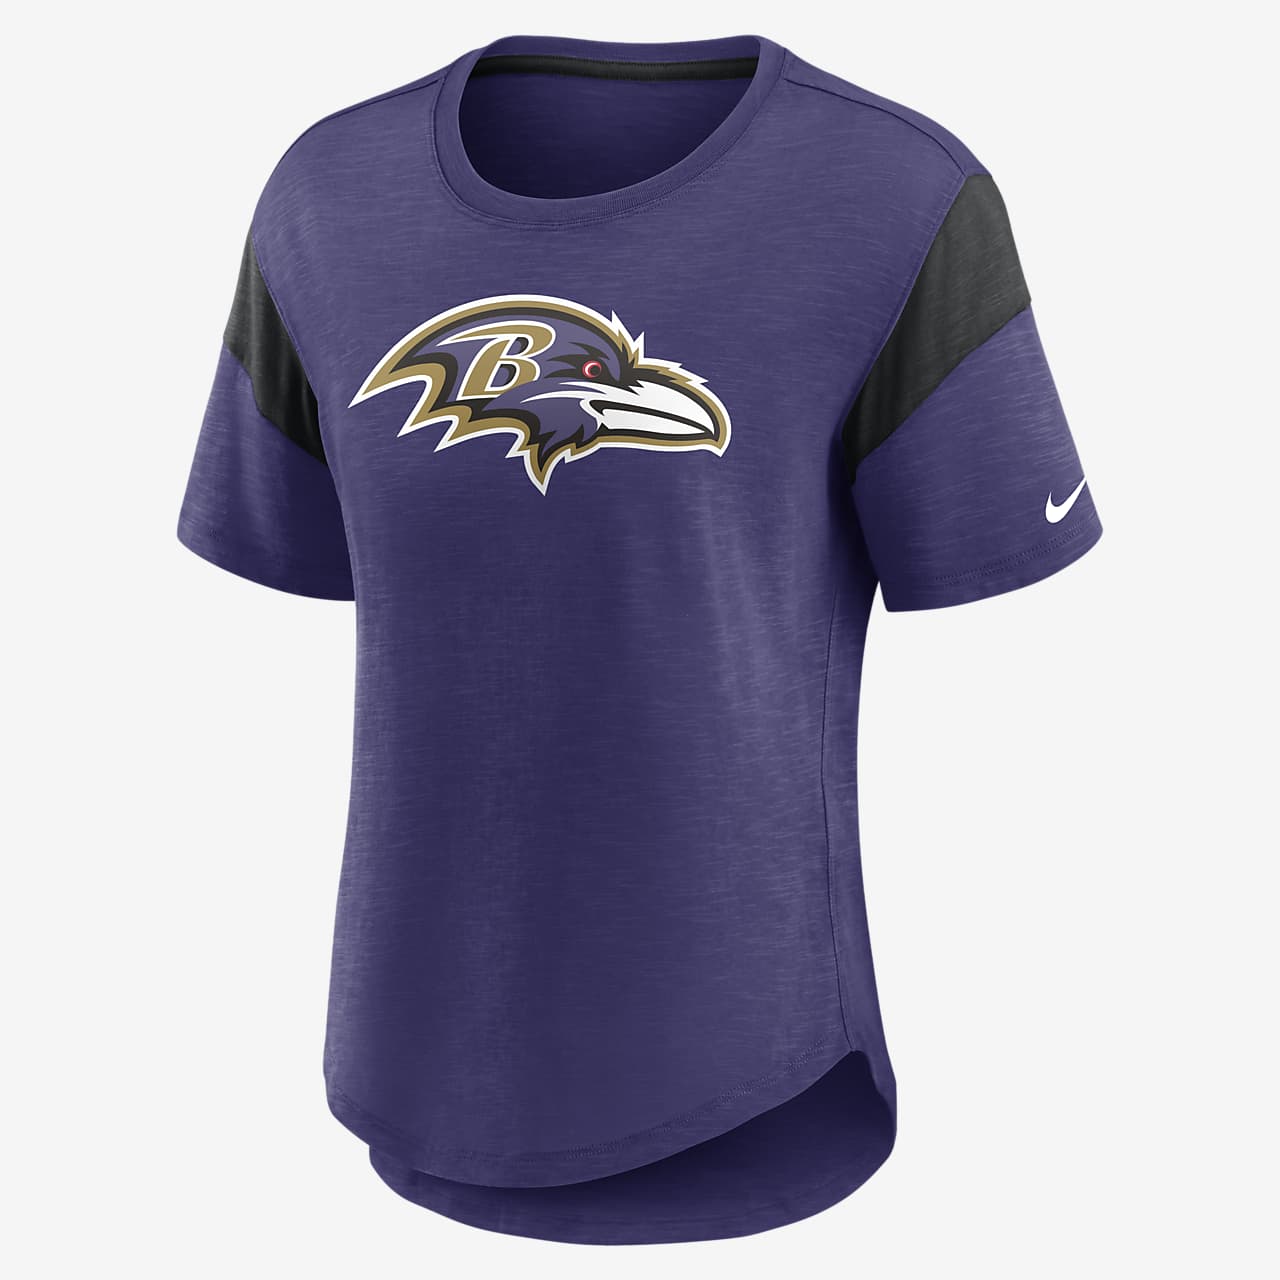 Nike Fashion Prime Logo (NFL Baltimore Ravens) Women's T-Shirt.